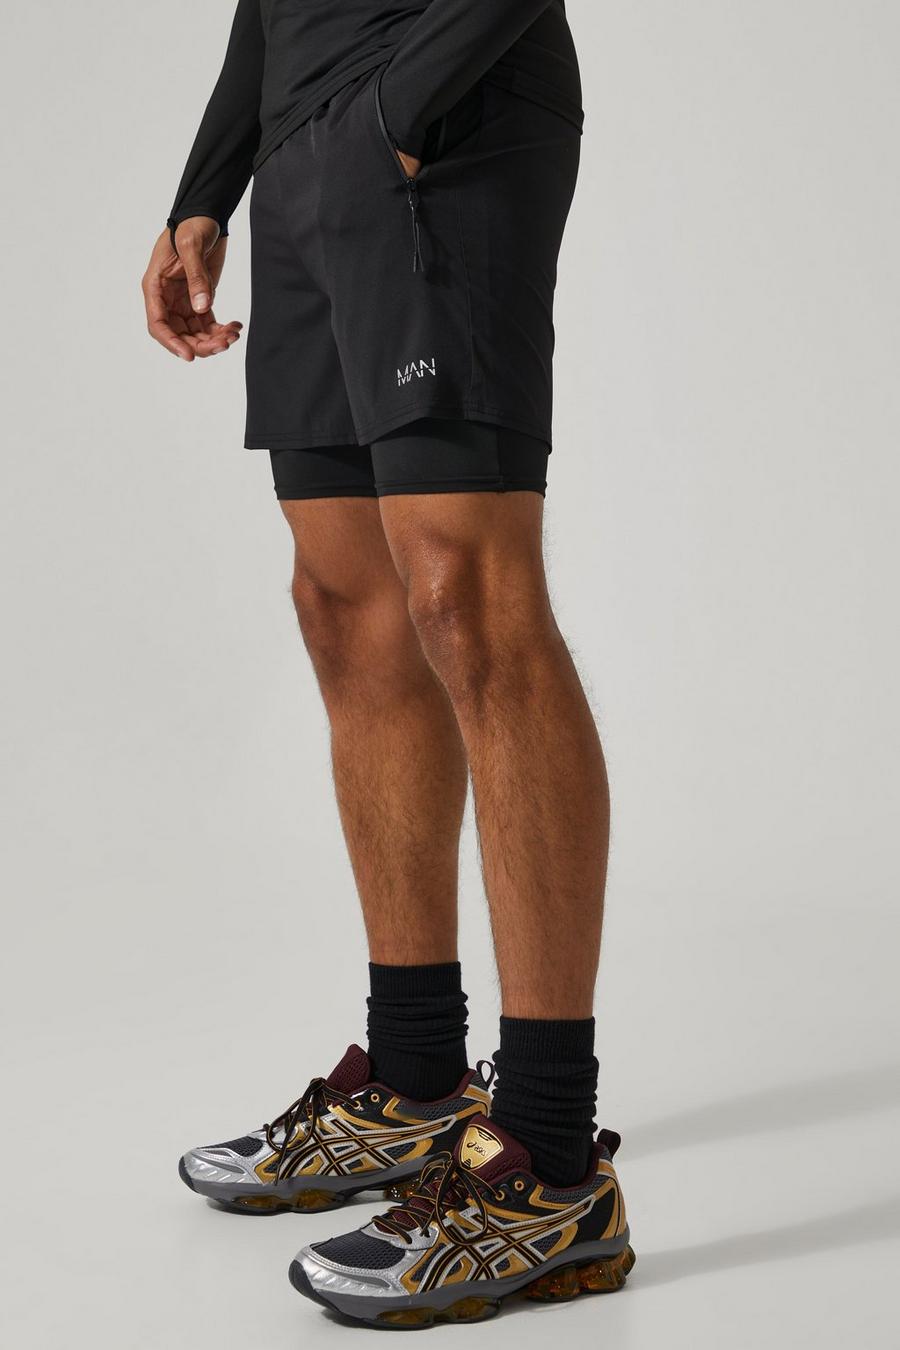 Man Active 2-in-1 Shorts, Black image number 1